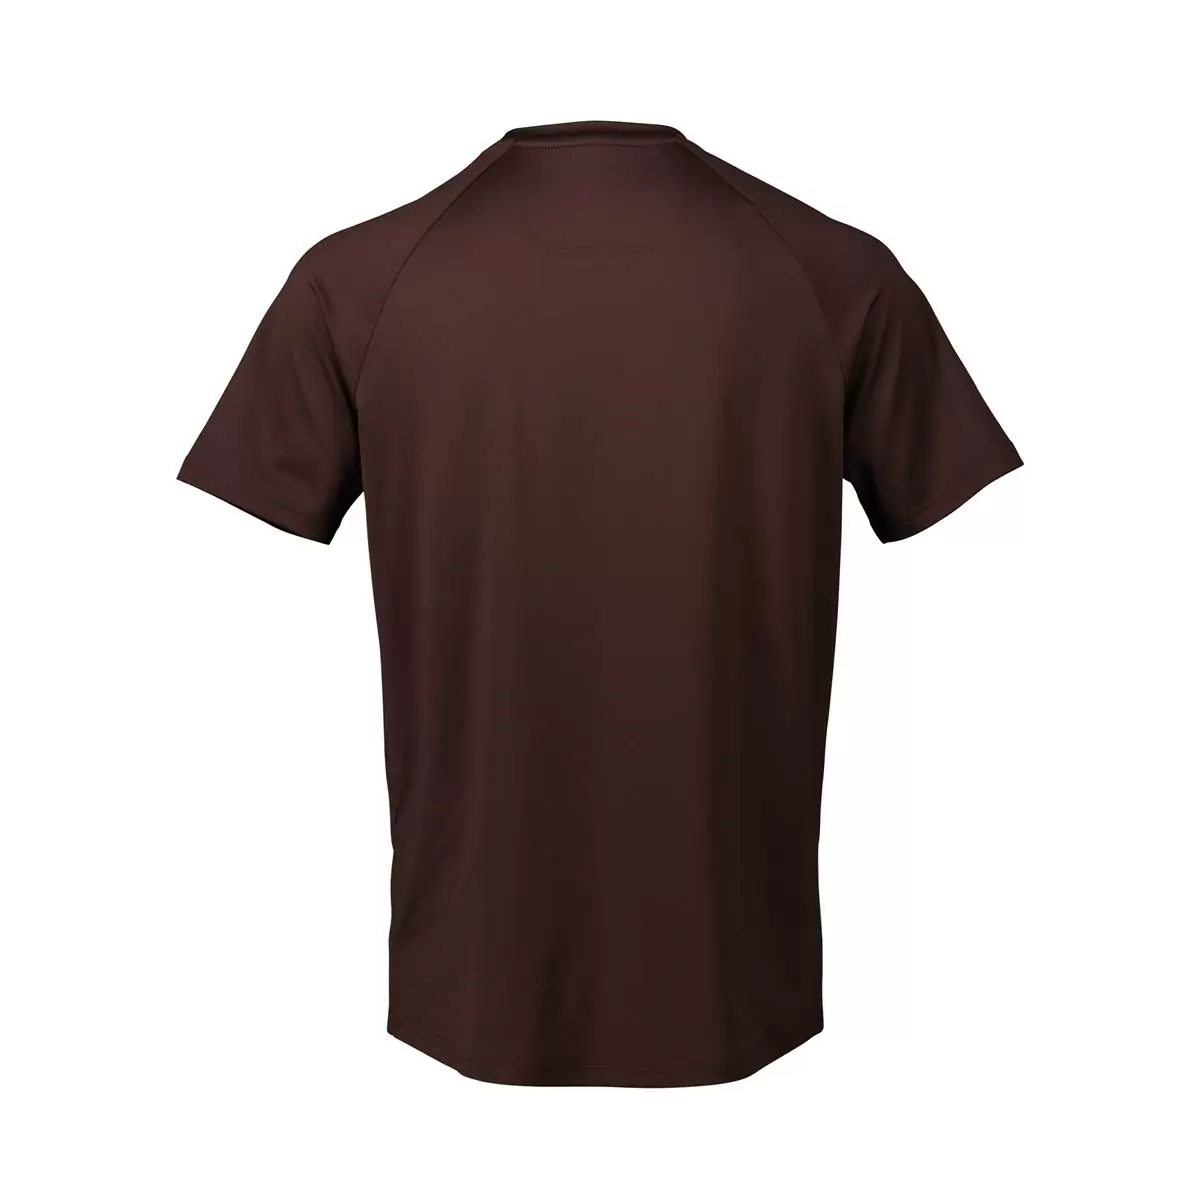 T-shirt Reform Enduro Axinite Marron taille L #1